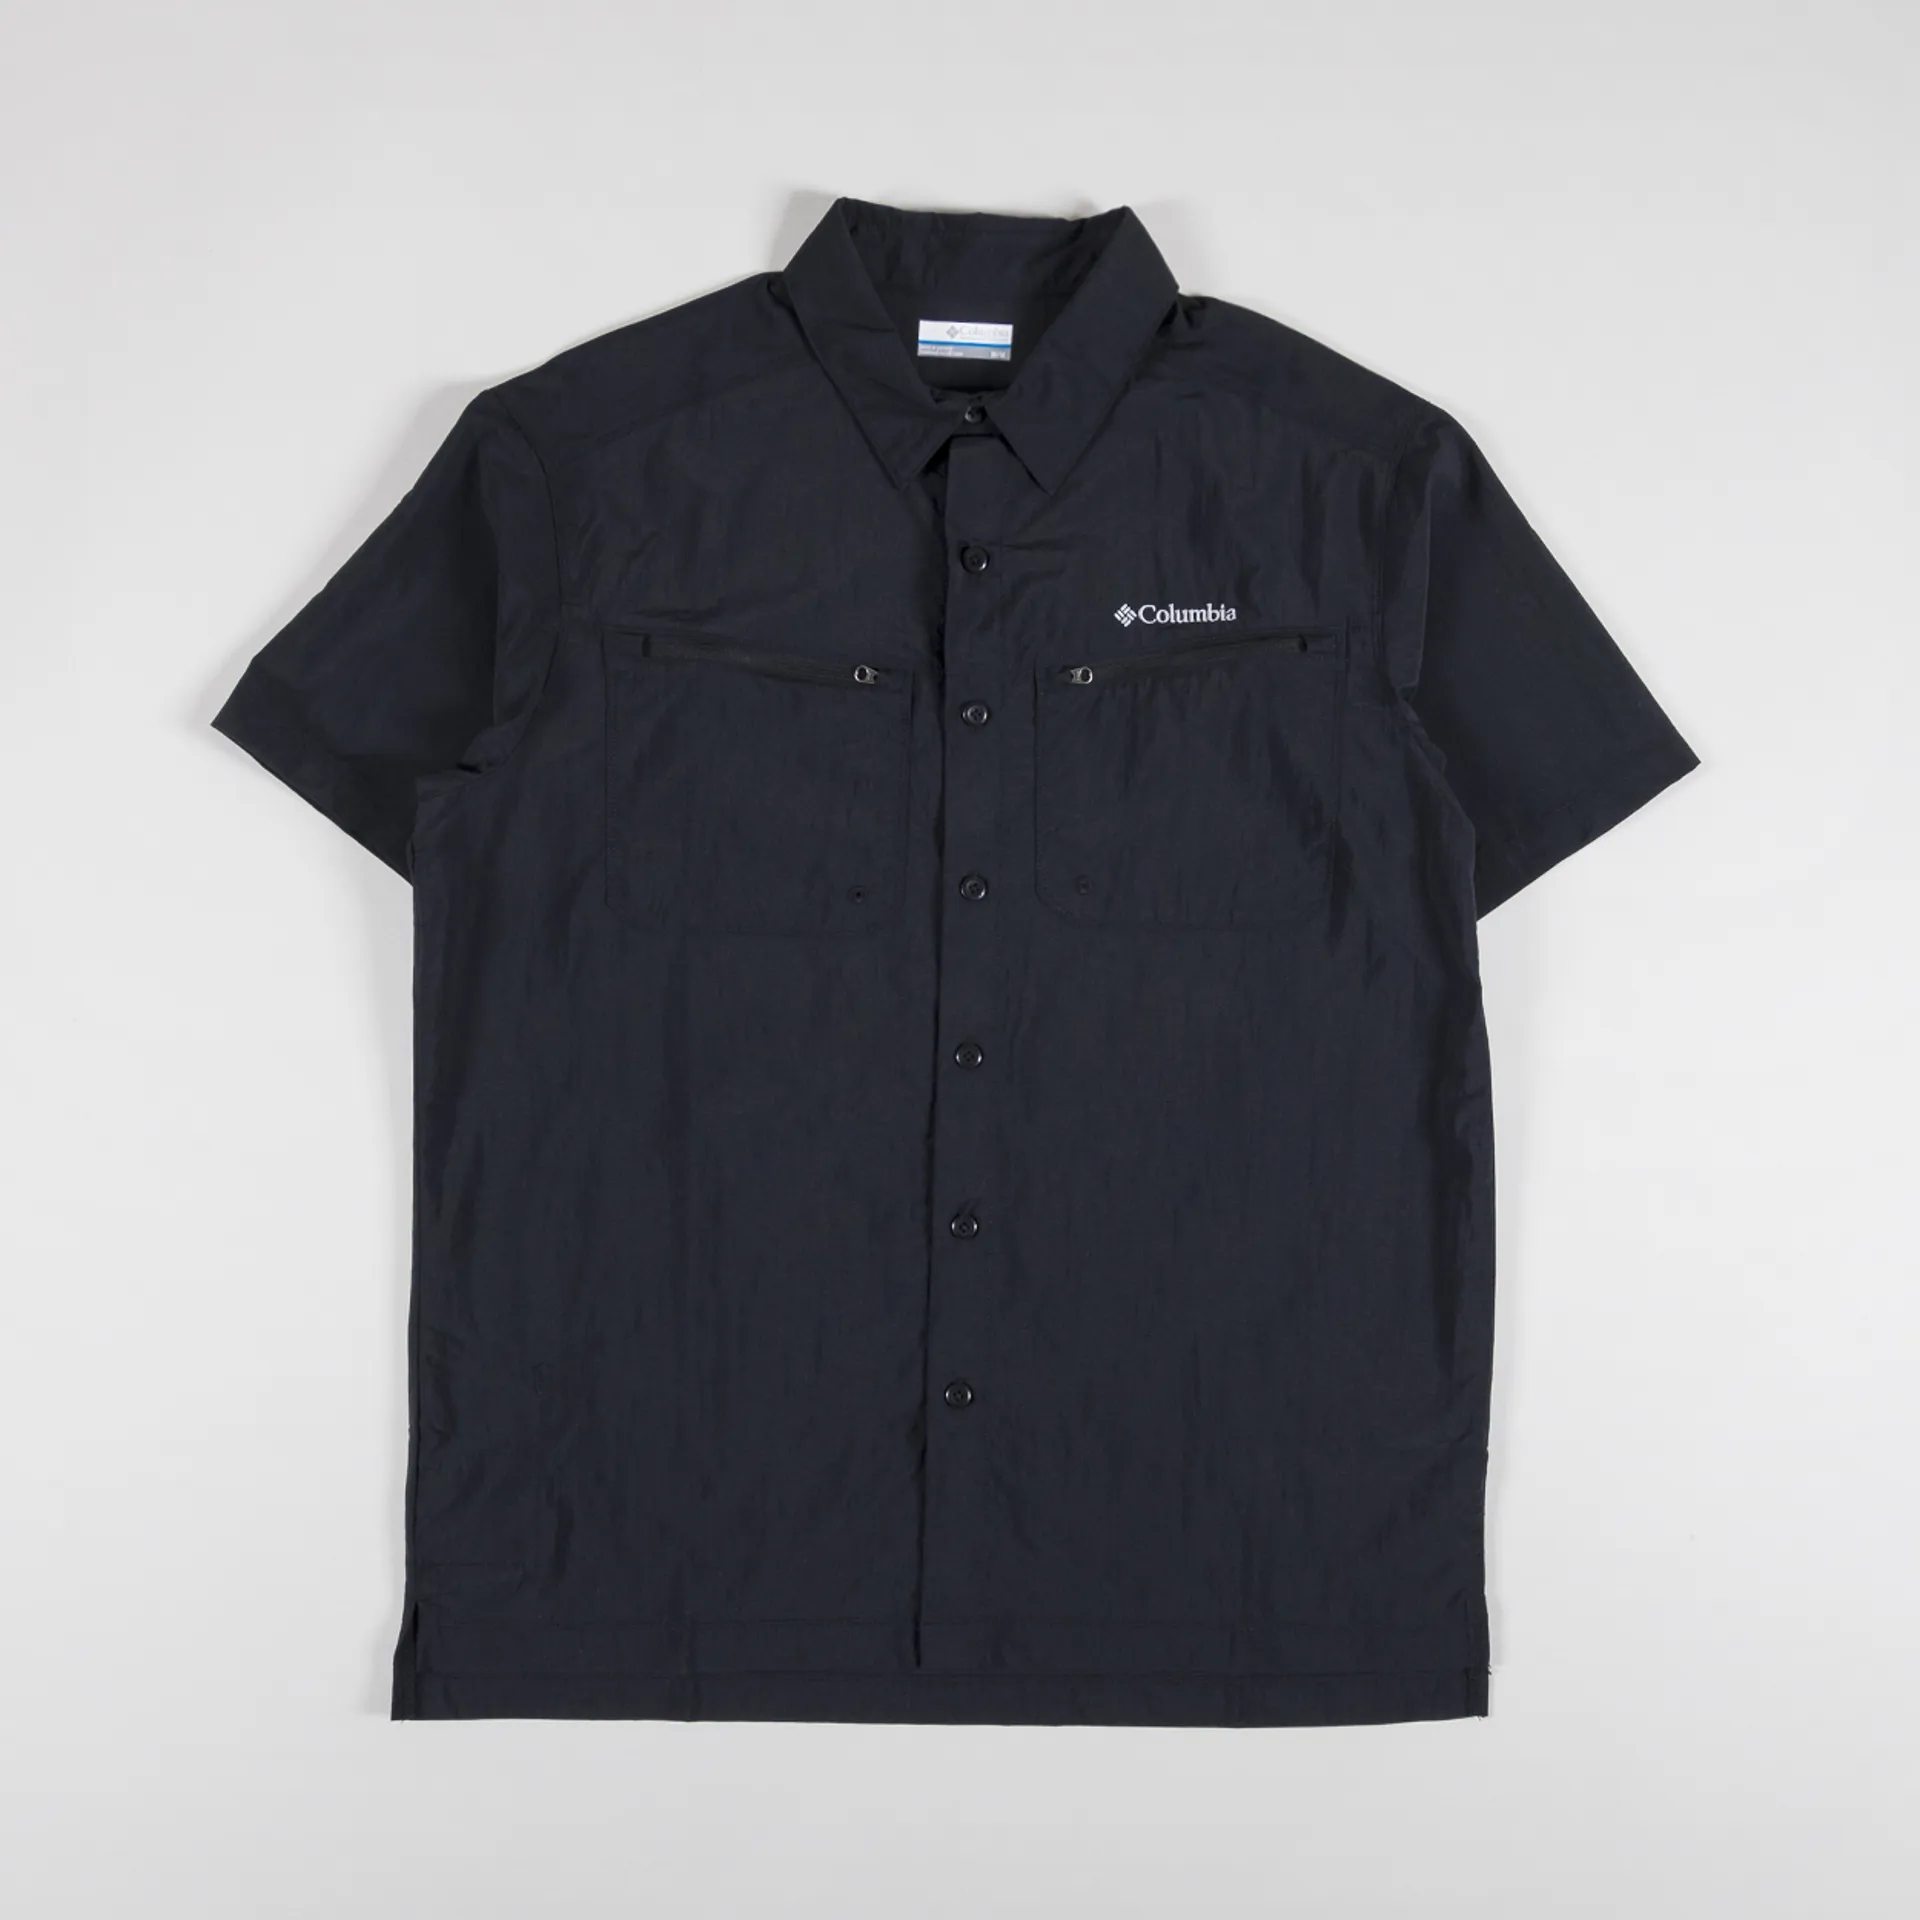 Columbia Mountaindale Technical Shirt Black